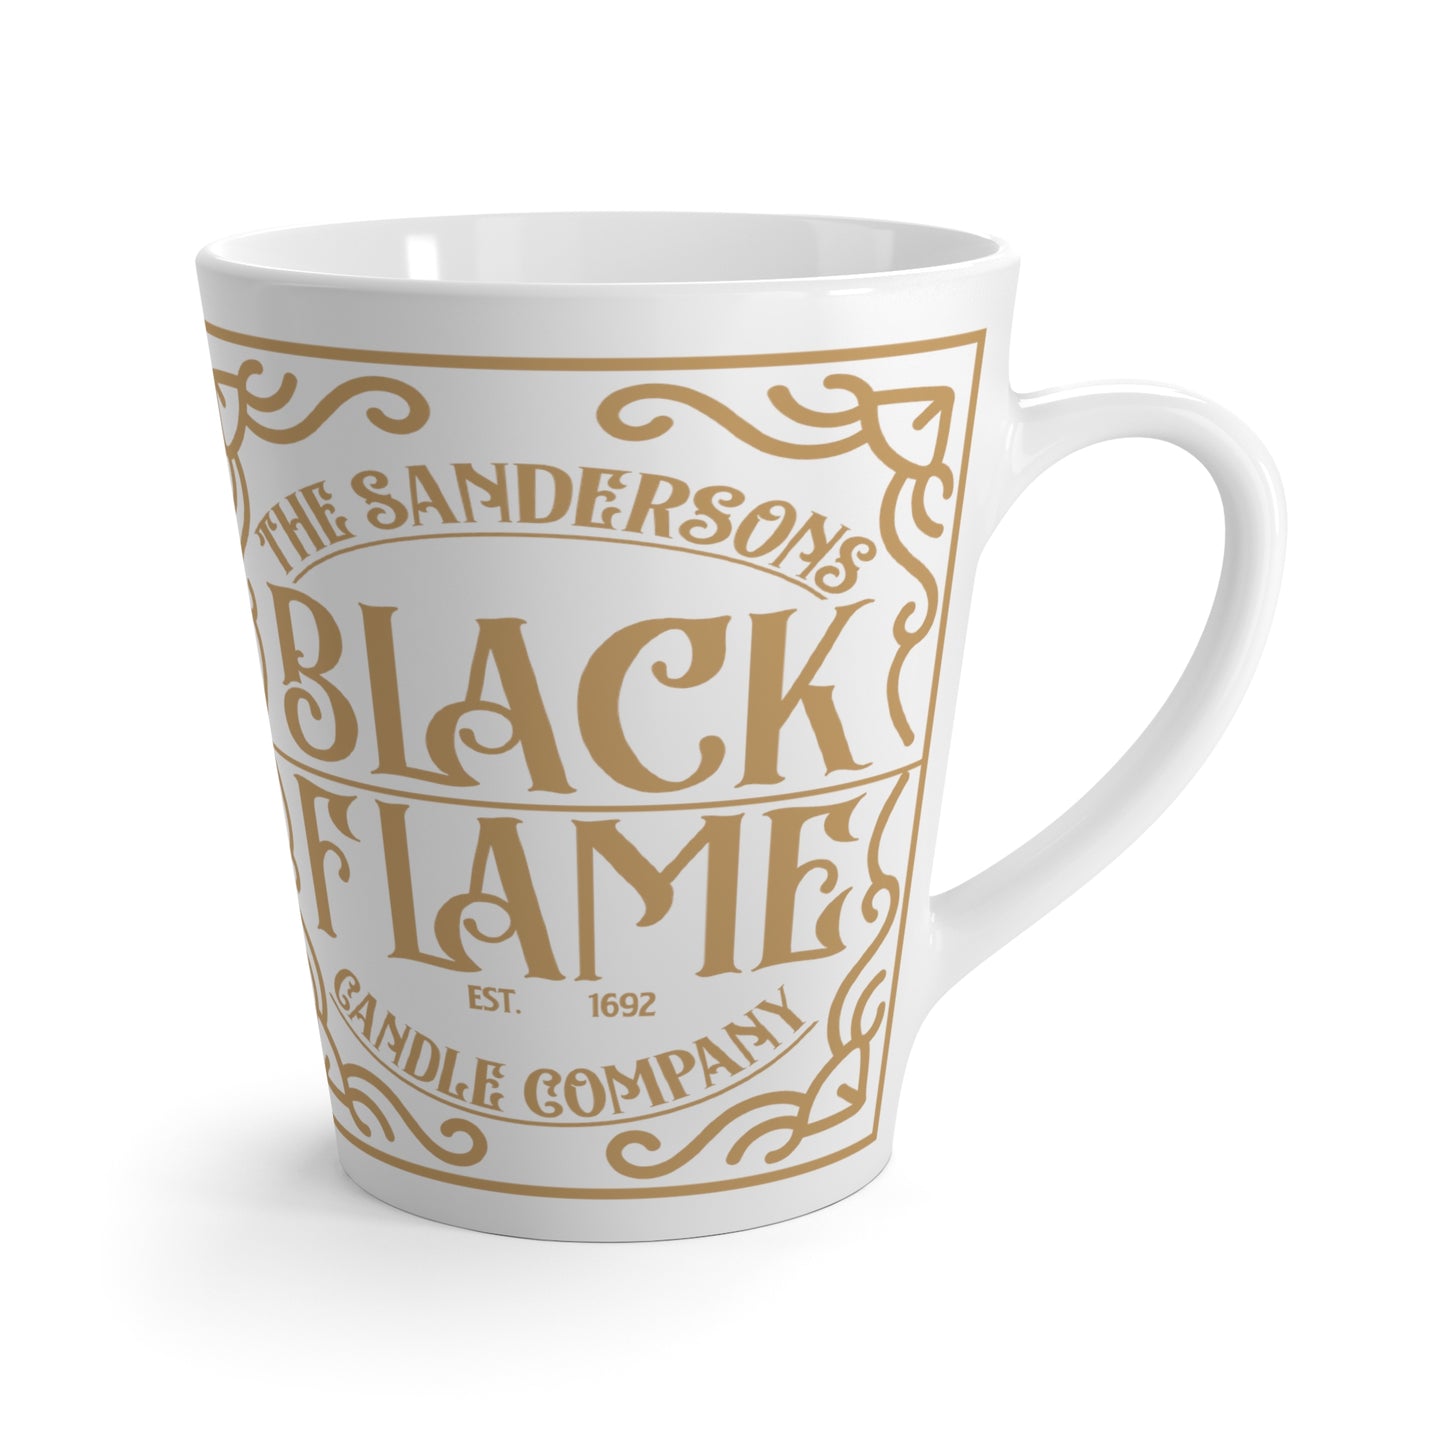 Black Flame Candle Company Latte Mug